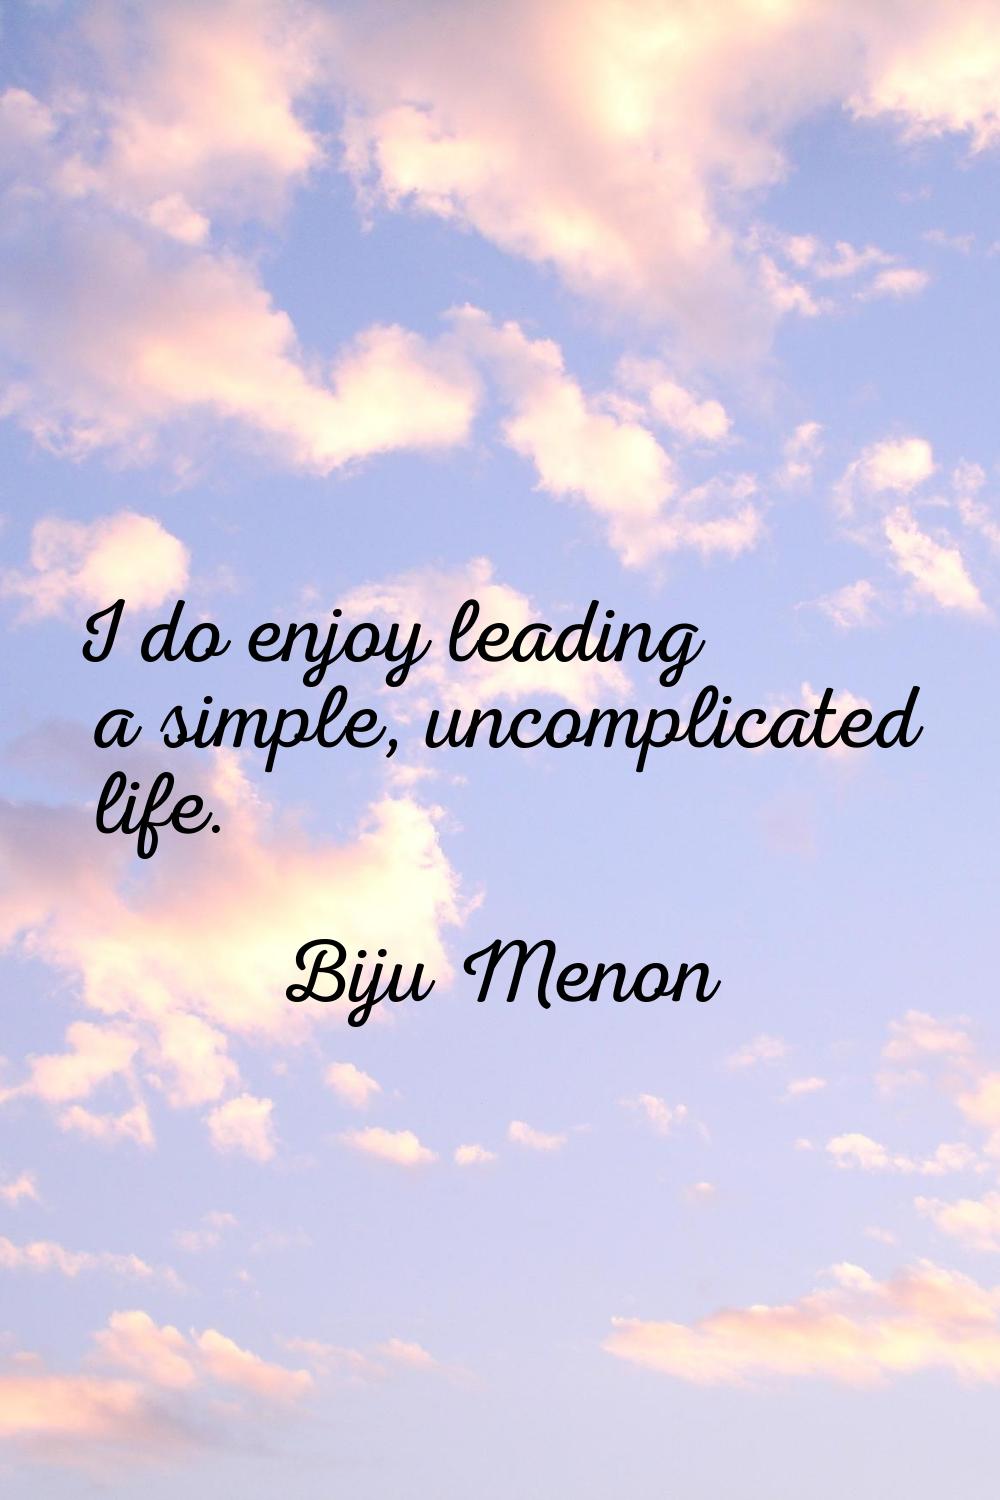 I do enjoy leading a simple, uncomplicated life.